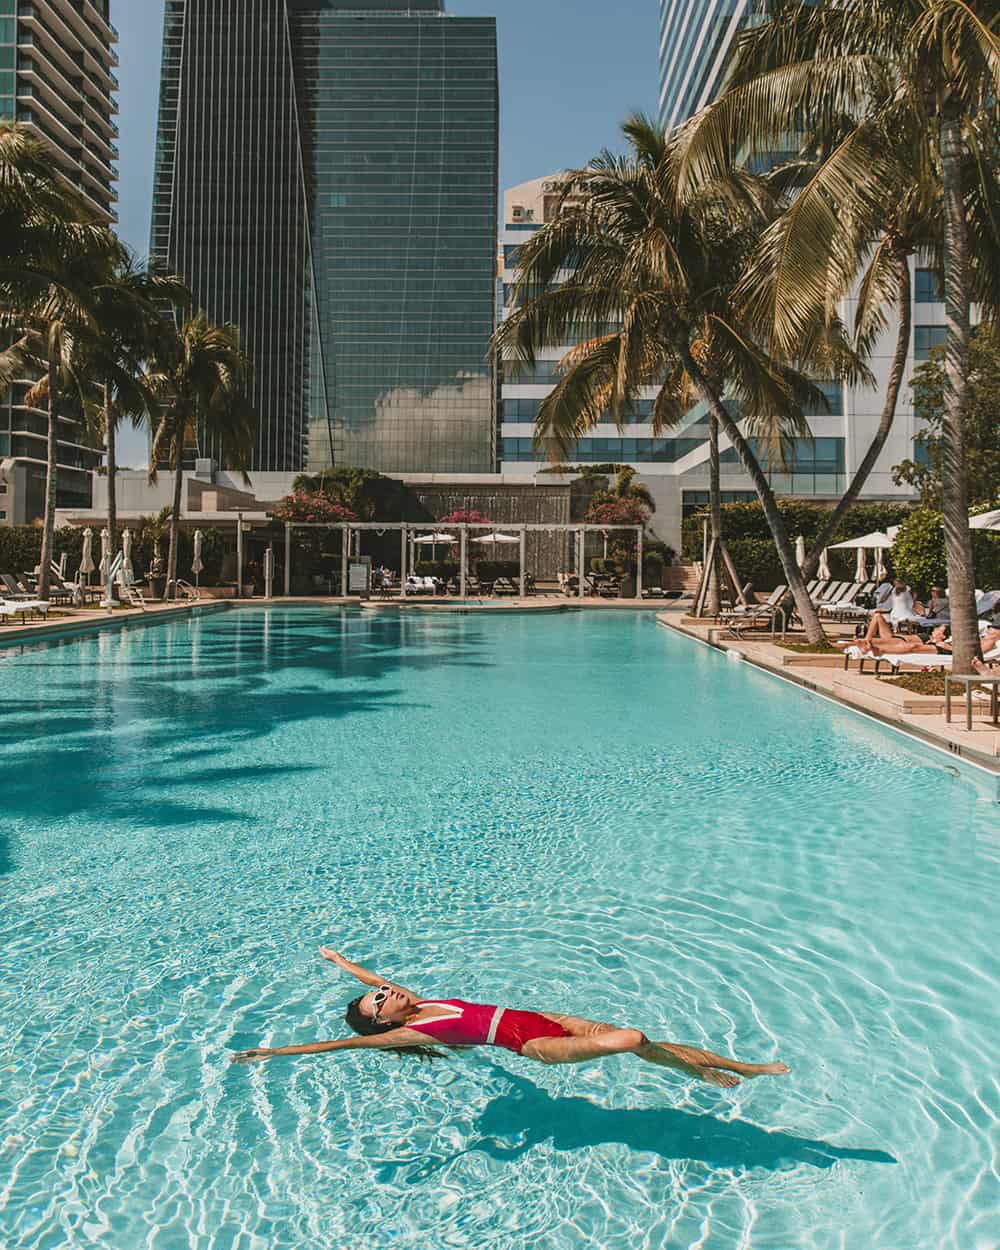 Floating in Four Seasons Miami hotel pool